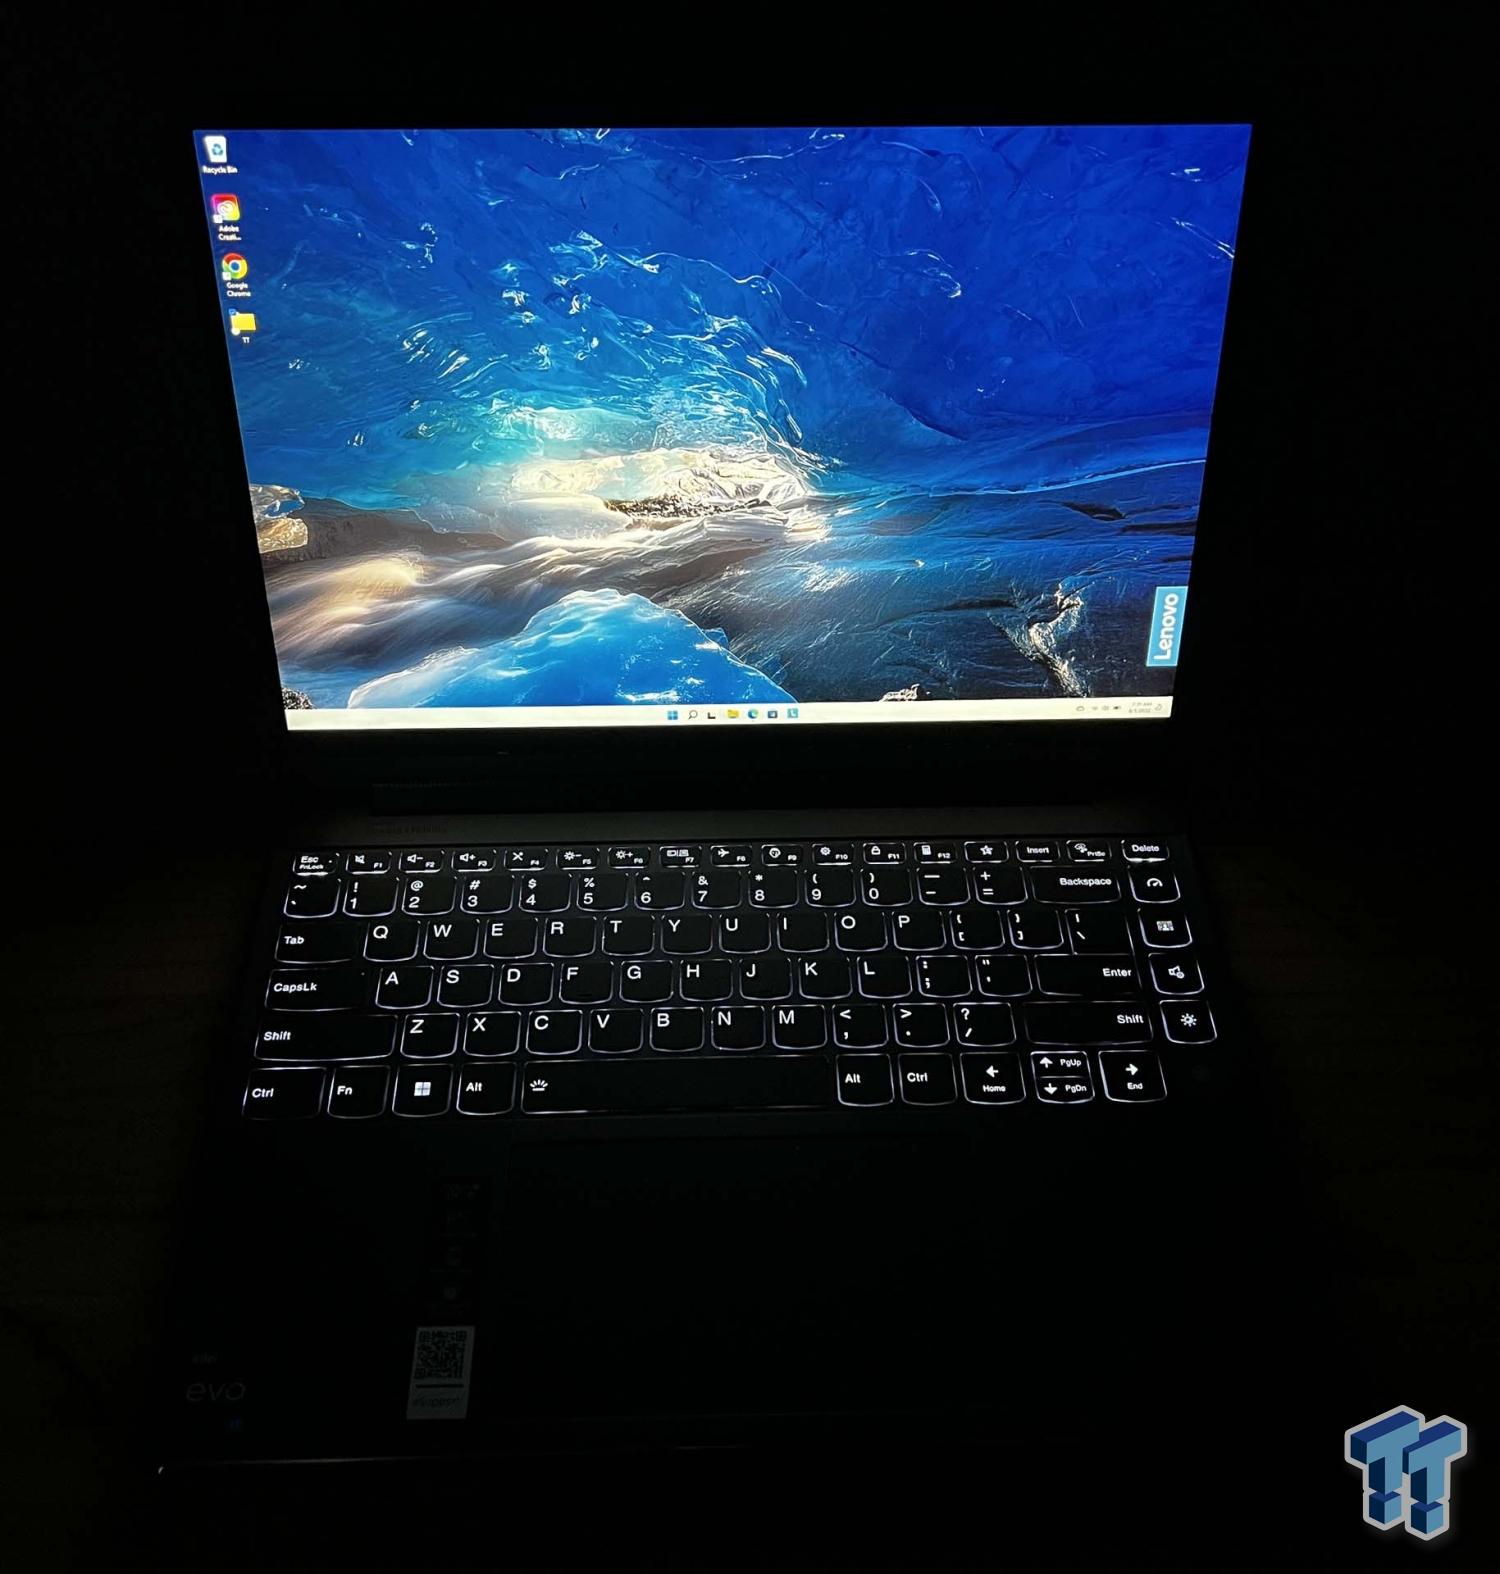 Lenovo Yoga 9i Touchscreen Laptop Review